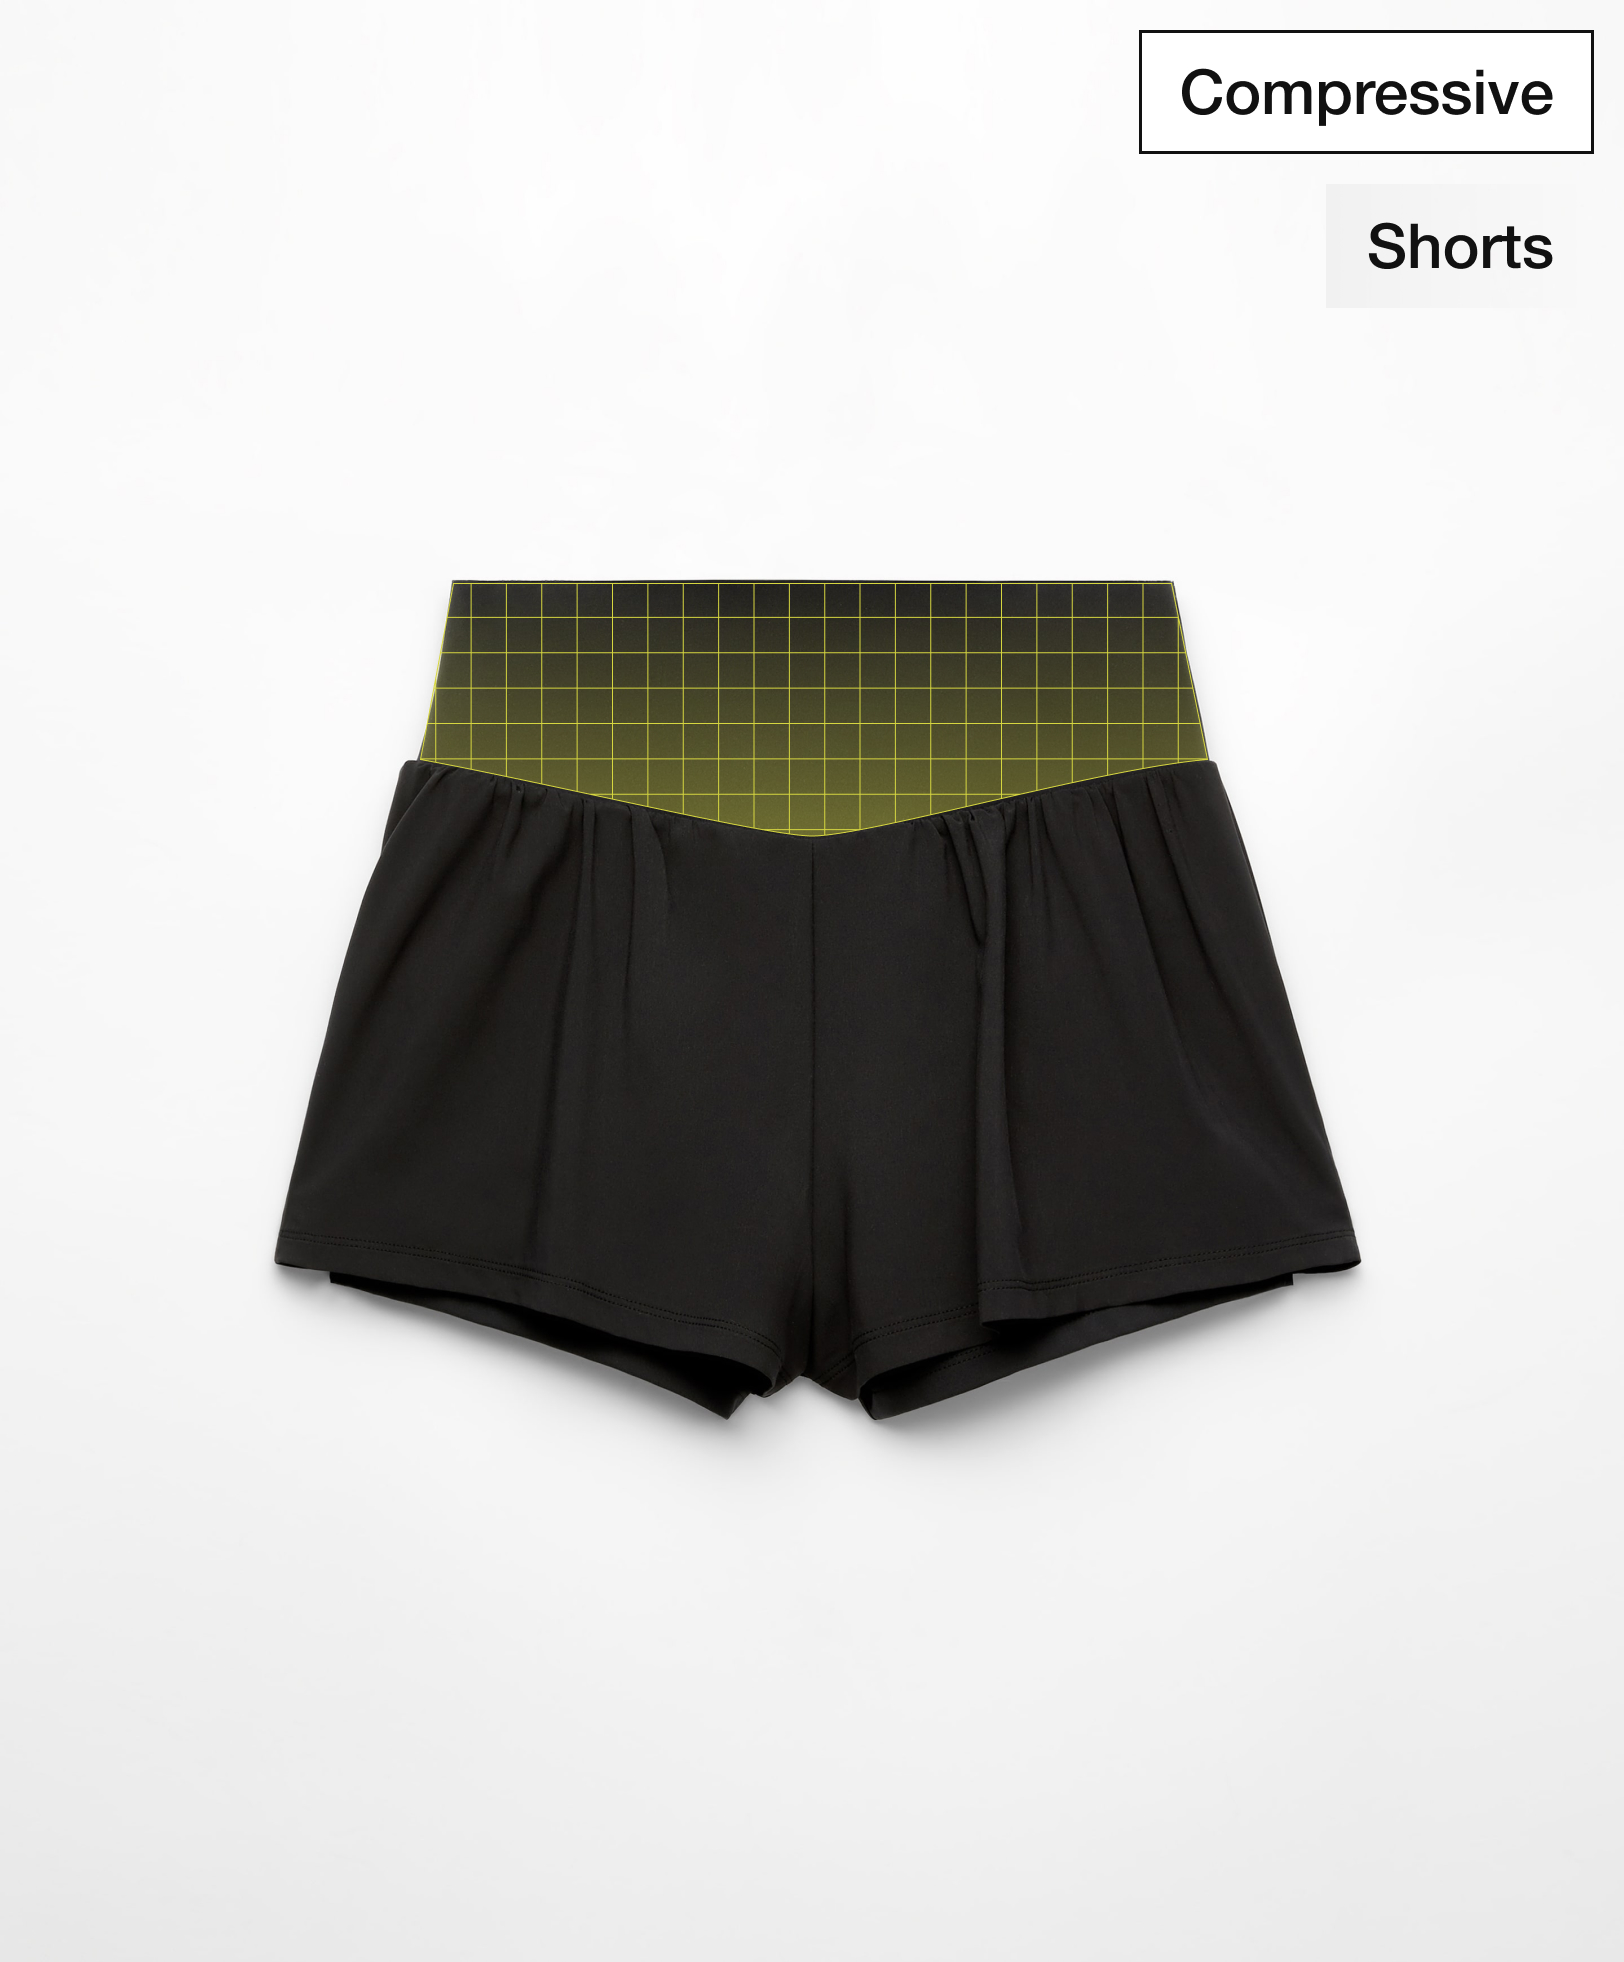 Compressive shorts met pocket 10 cm